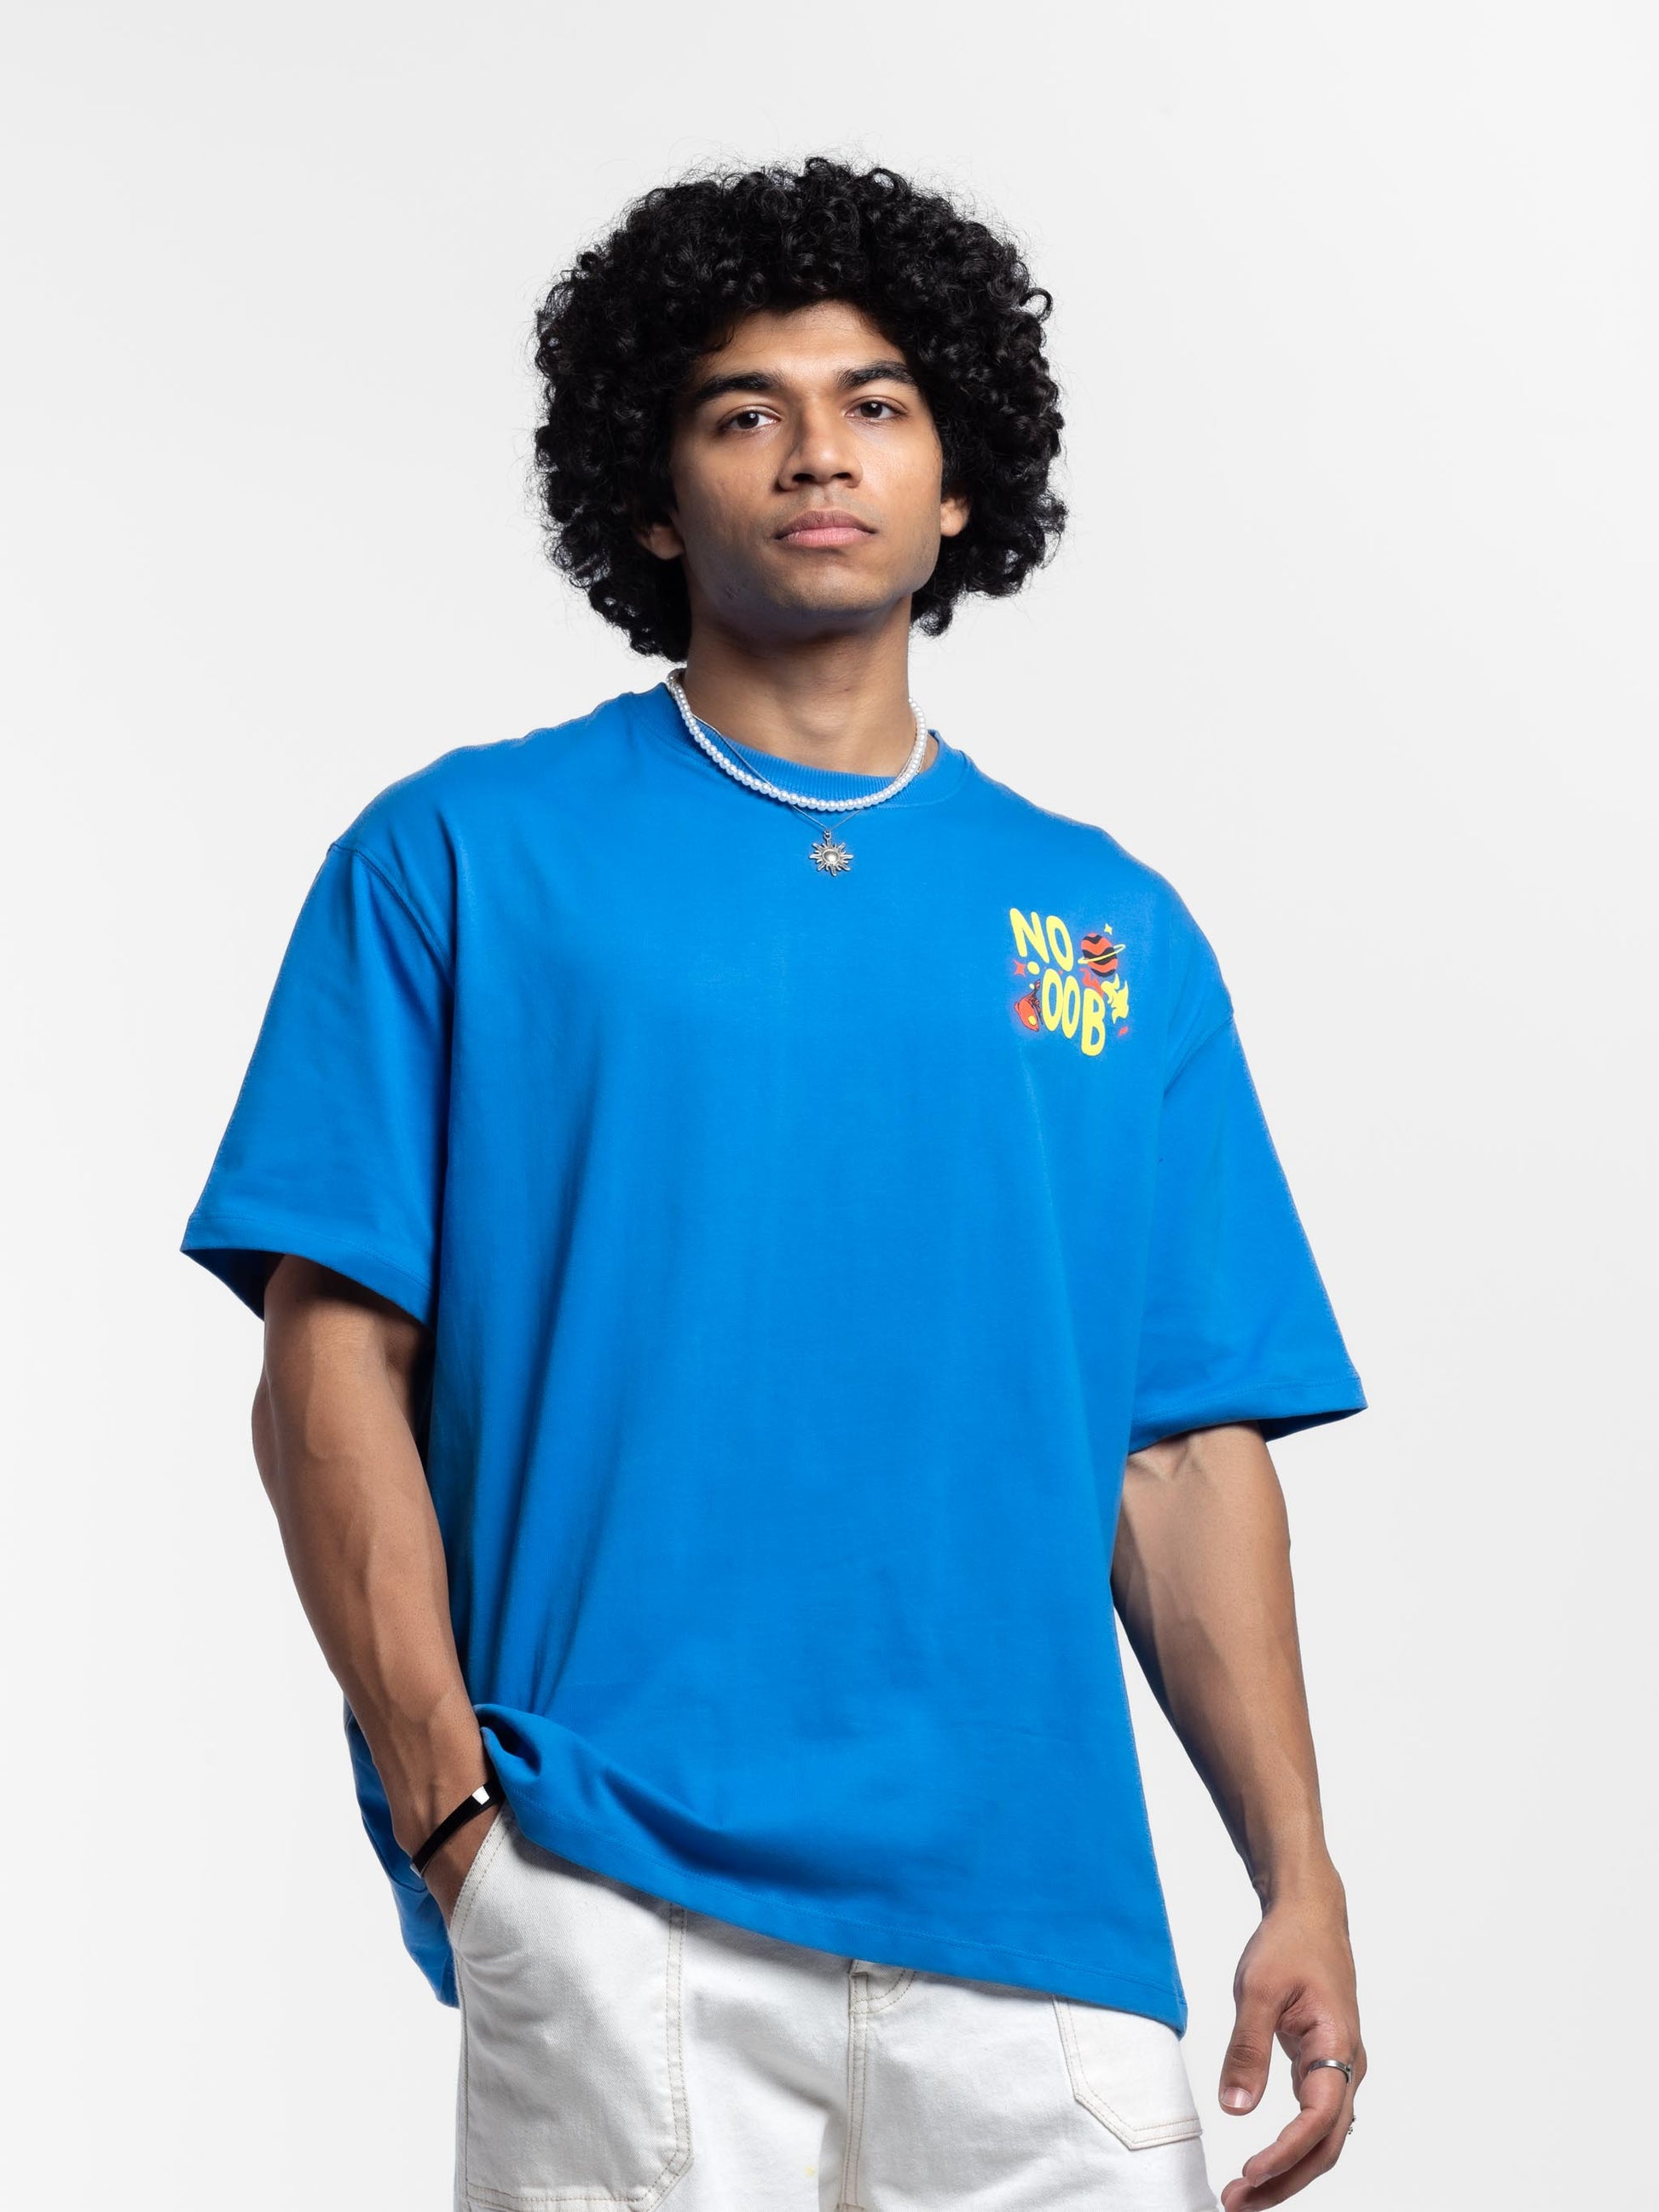 Buy Best Blue T-shirts for Men Online